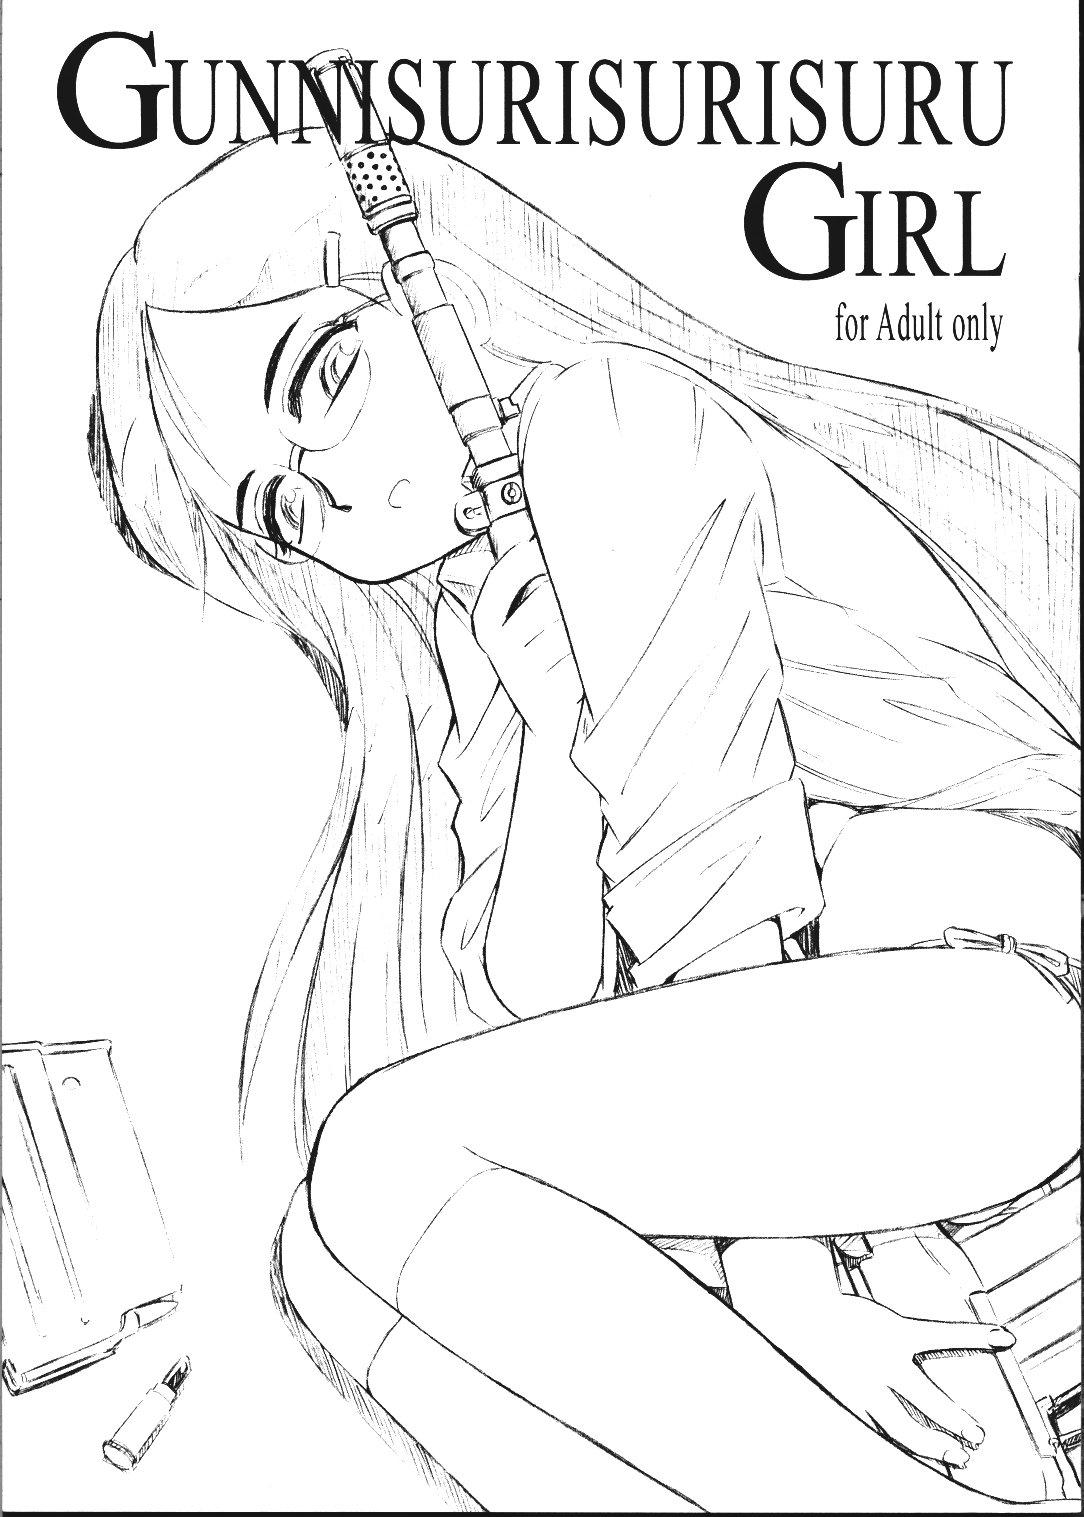 Gunnisurisurisuru Girl 1